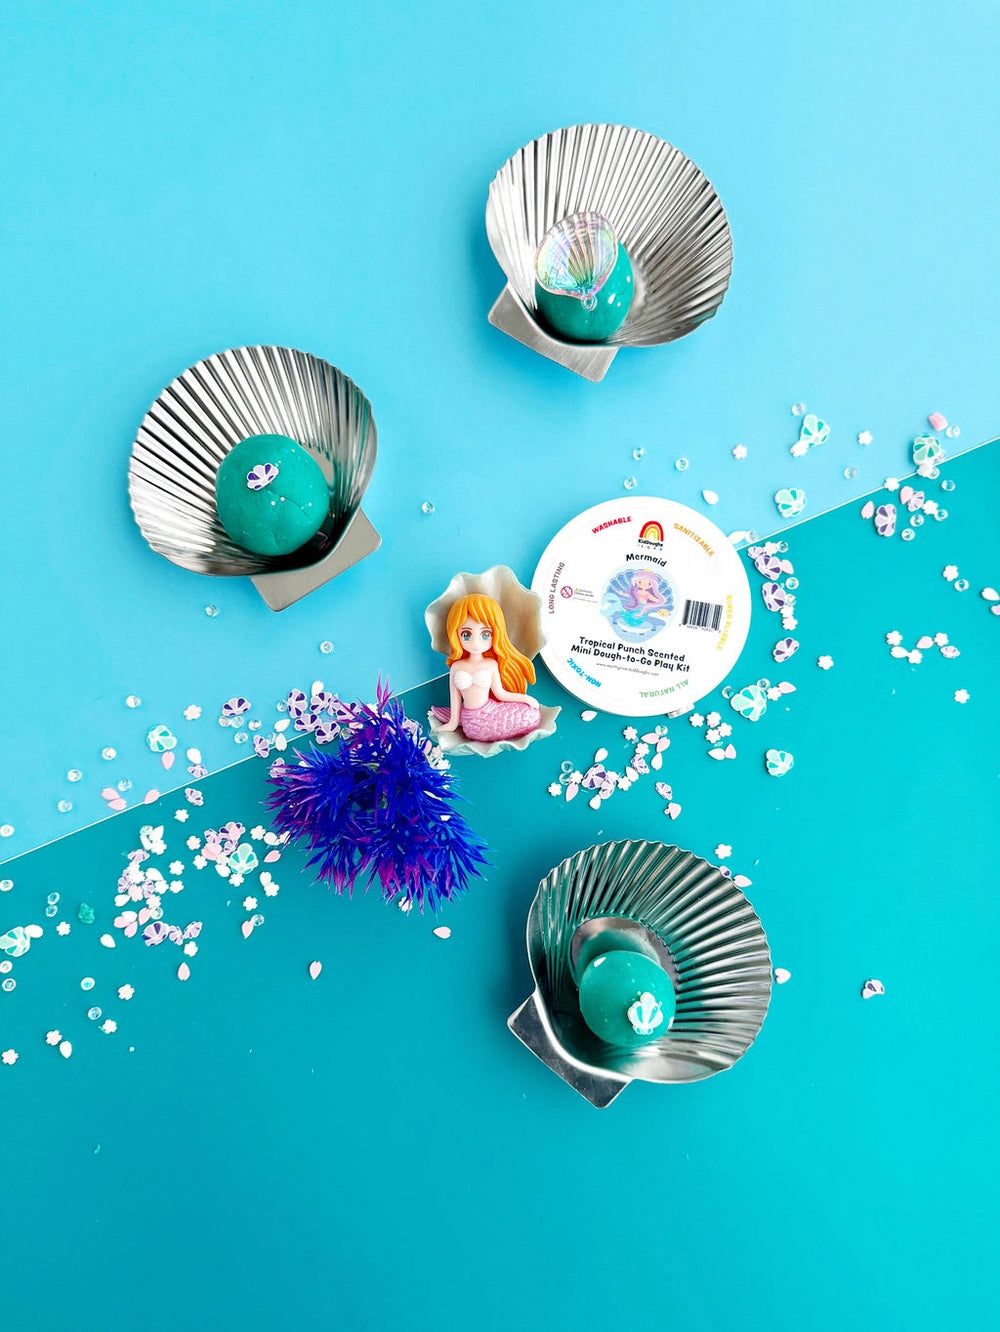 Mermaid Mini Dough-To-Go Play Kit